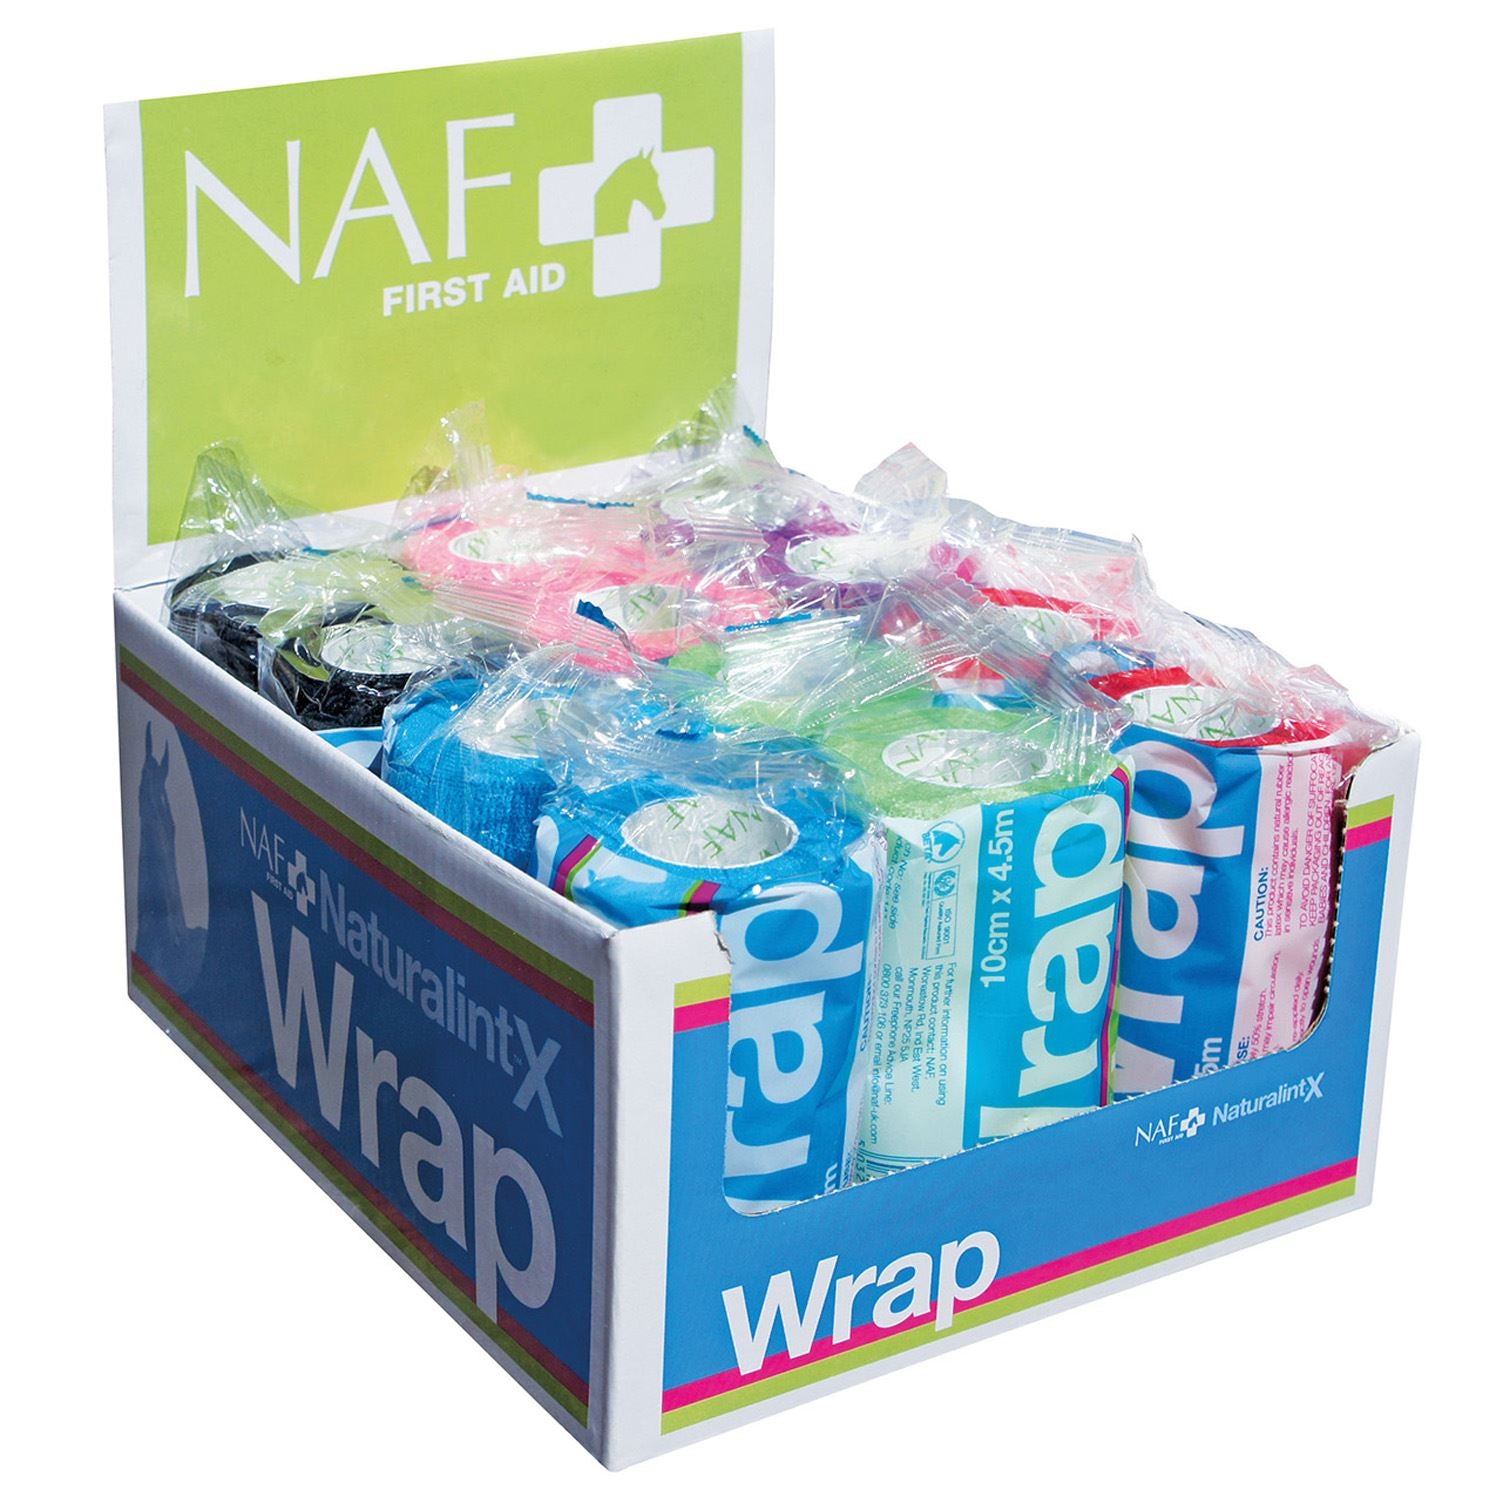 NAF Naturalintx Wrap - Just Horse Riders